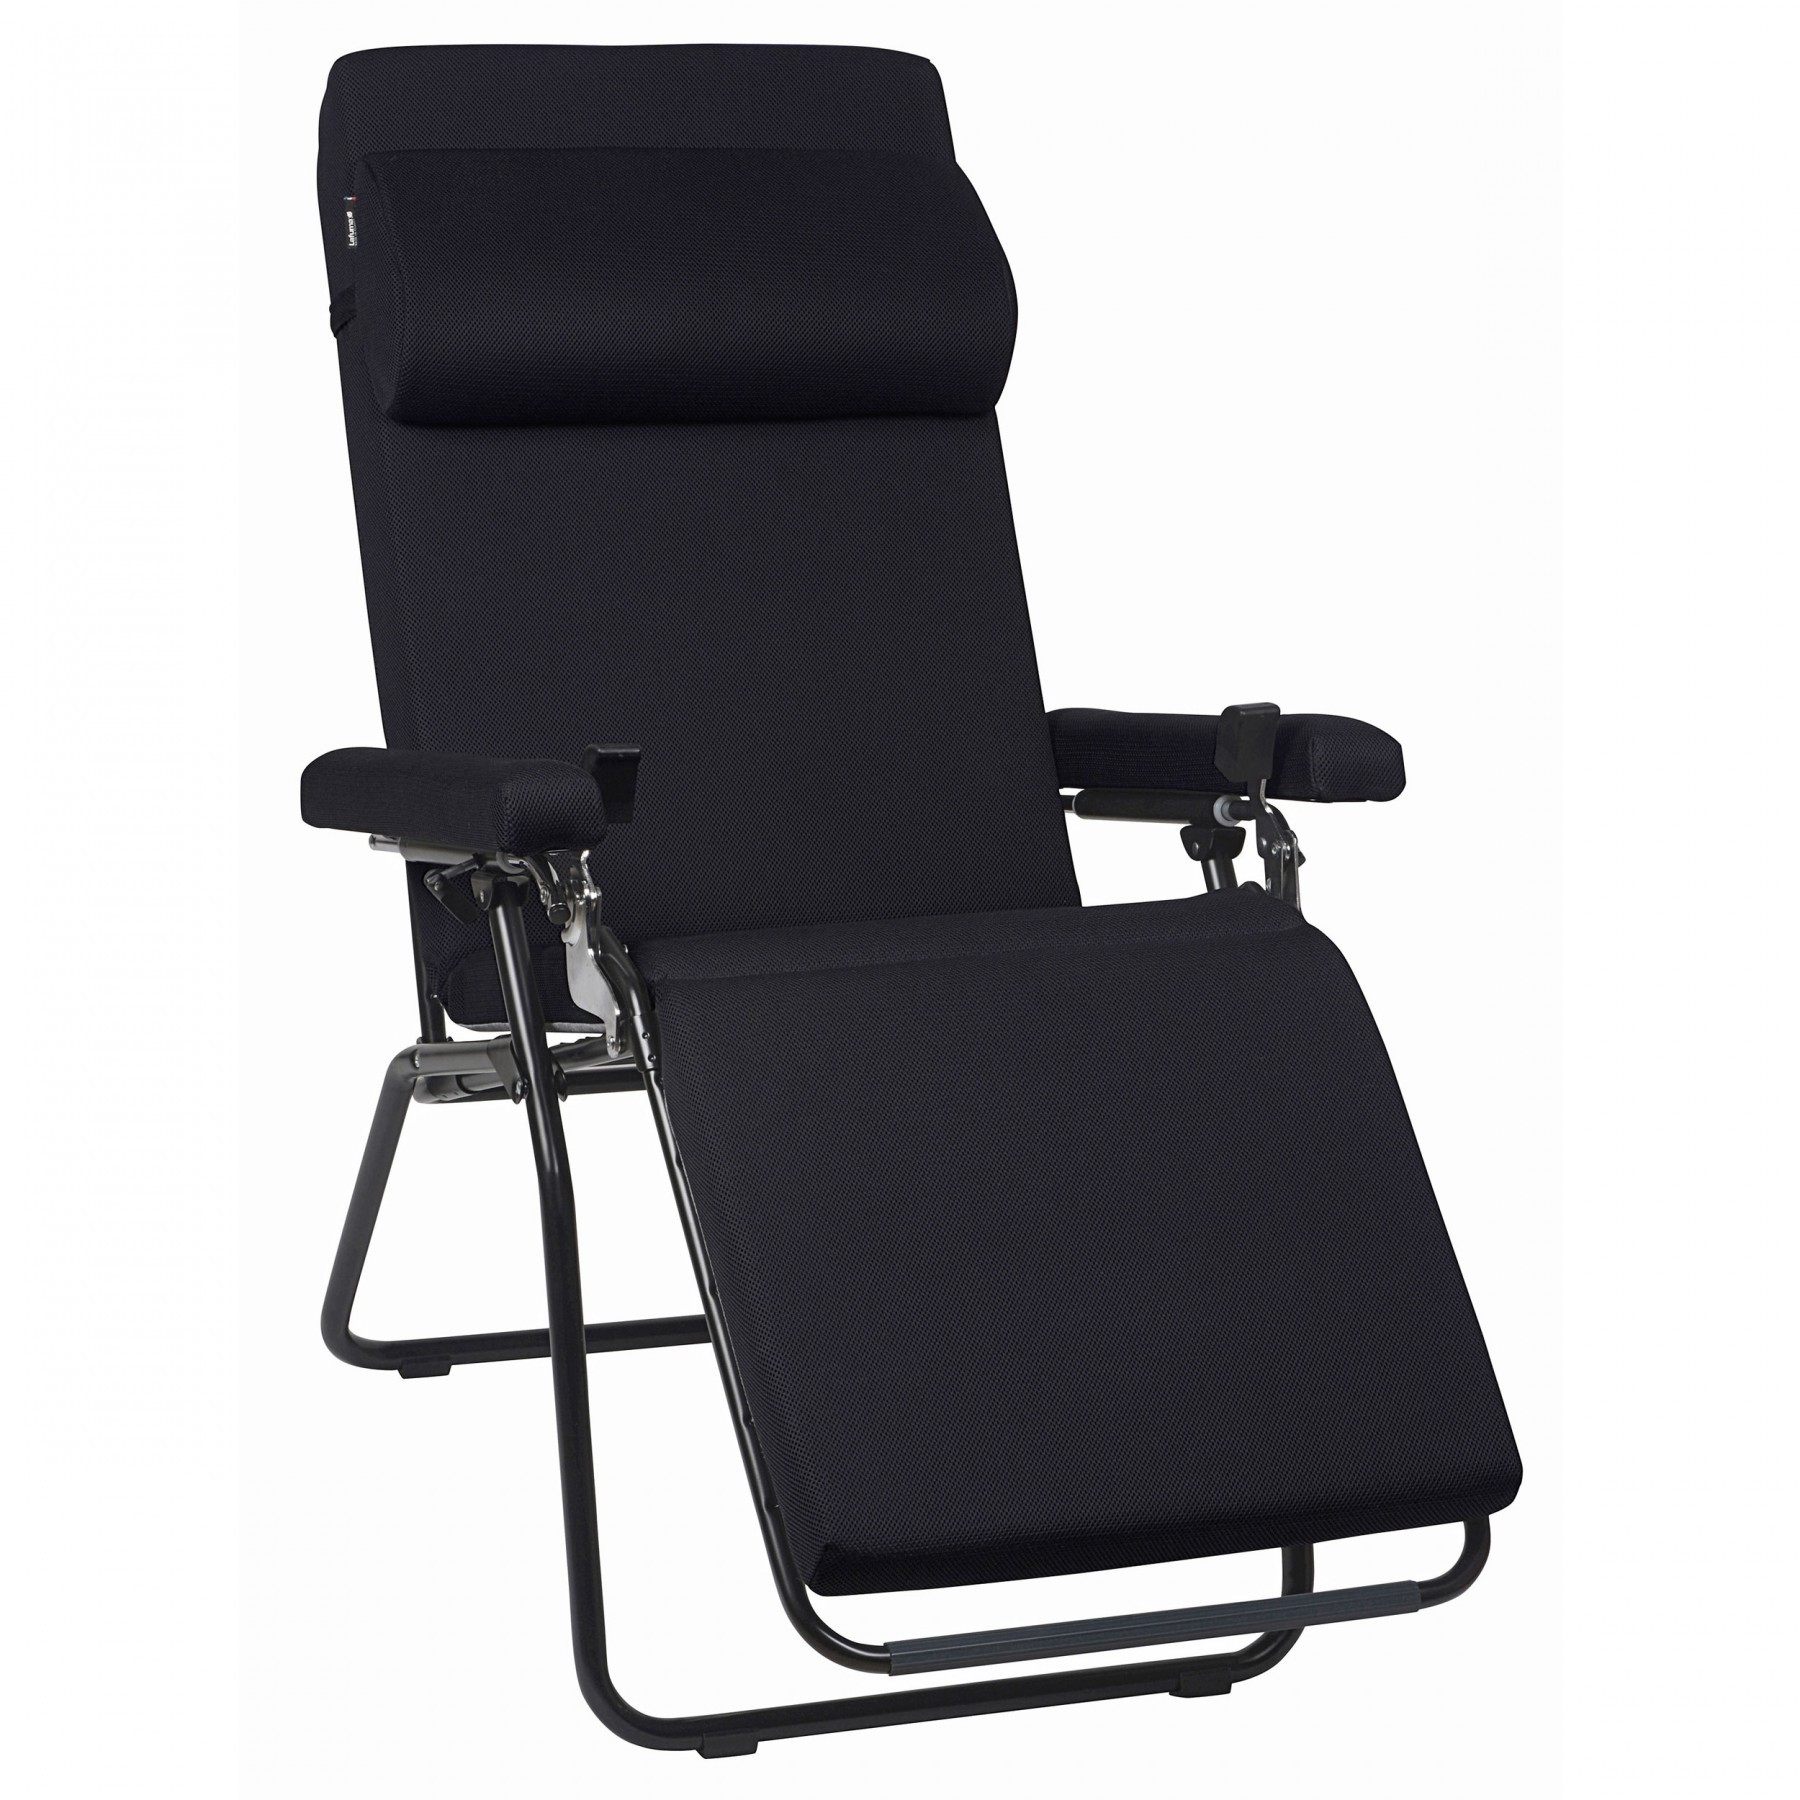 chaise pliante camping decathlon elegant fauteuil relax lafuma pour chaise pliante camping decathlon elegant lafuma frais 50 unique collection de of